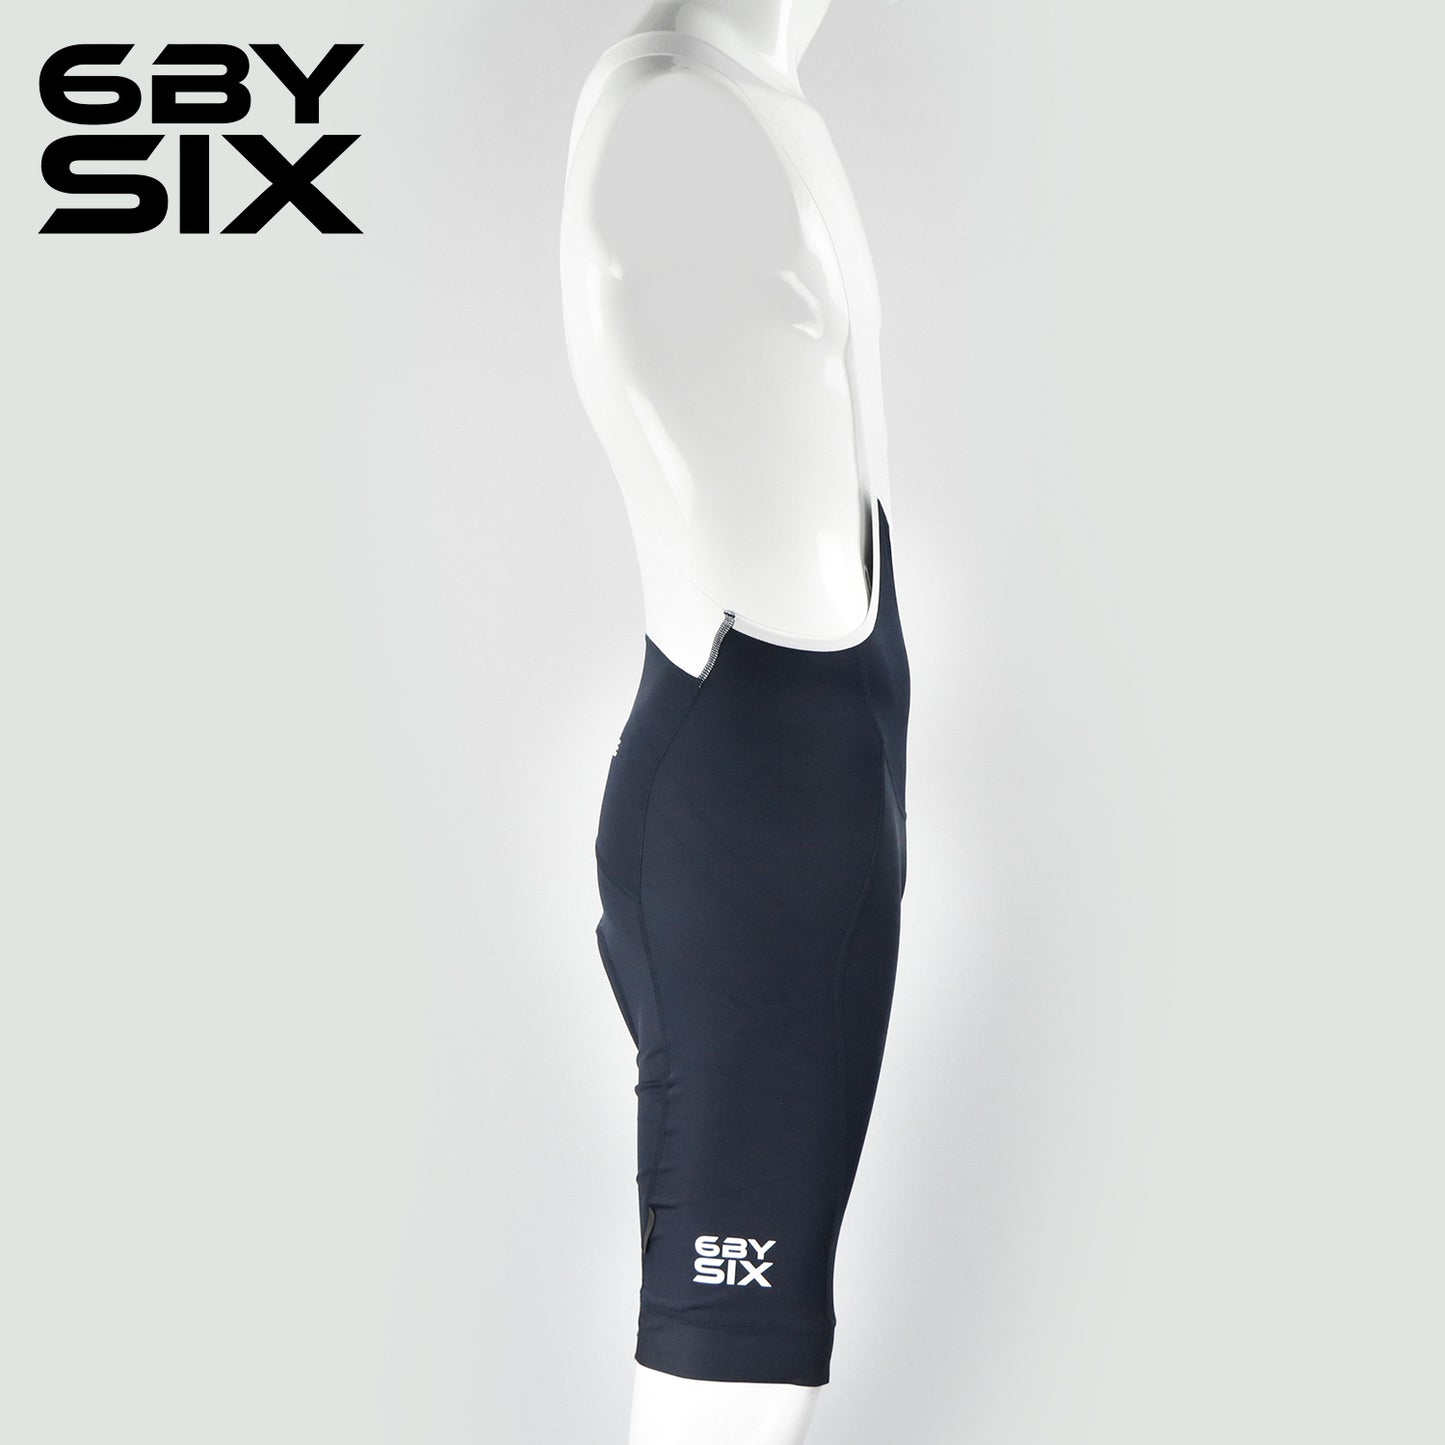 6bySix Adaptive Bib Shorts - Navy Blue